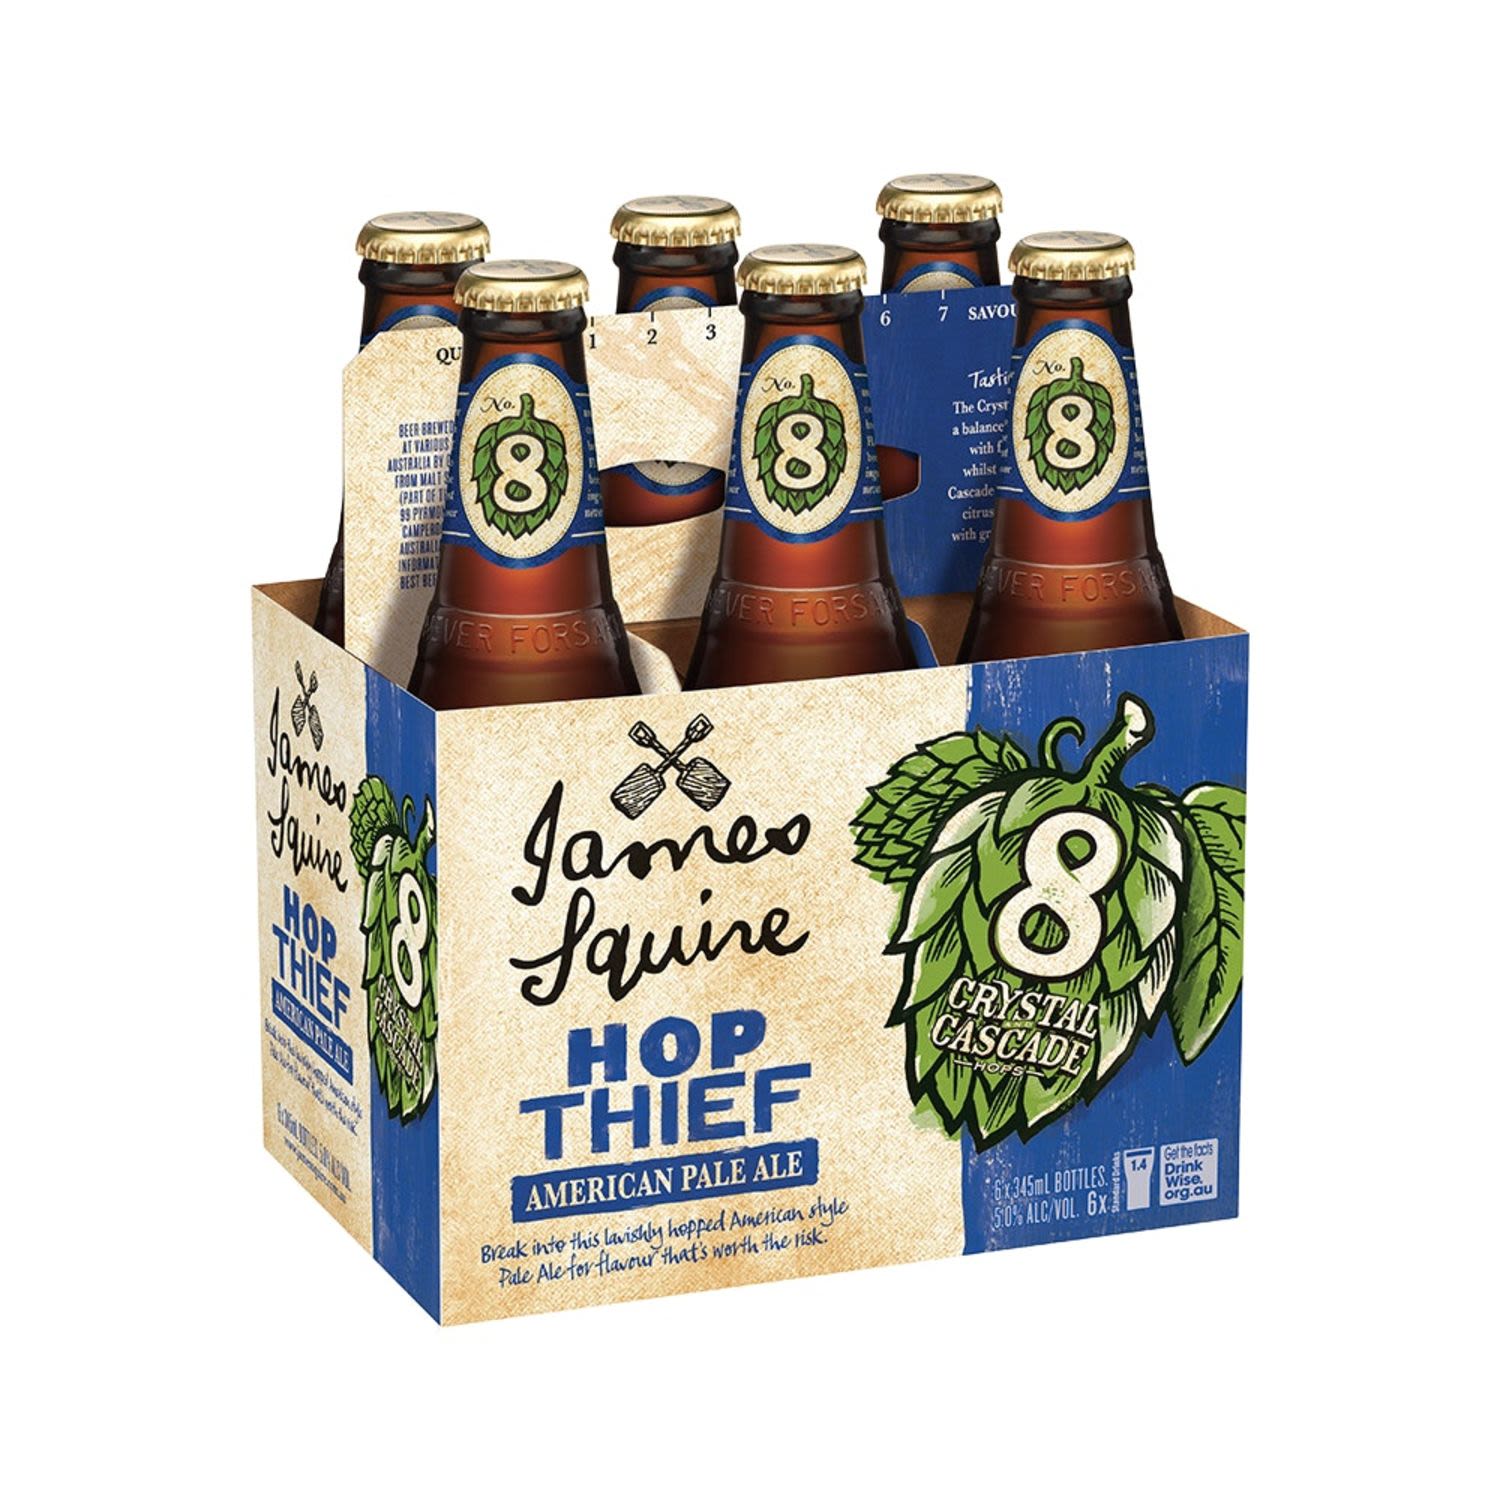 James Squire Hop Thief American Pale Ale Bottle 345mL 6 Pack